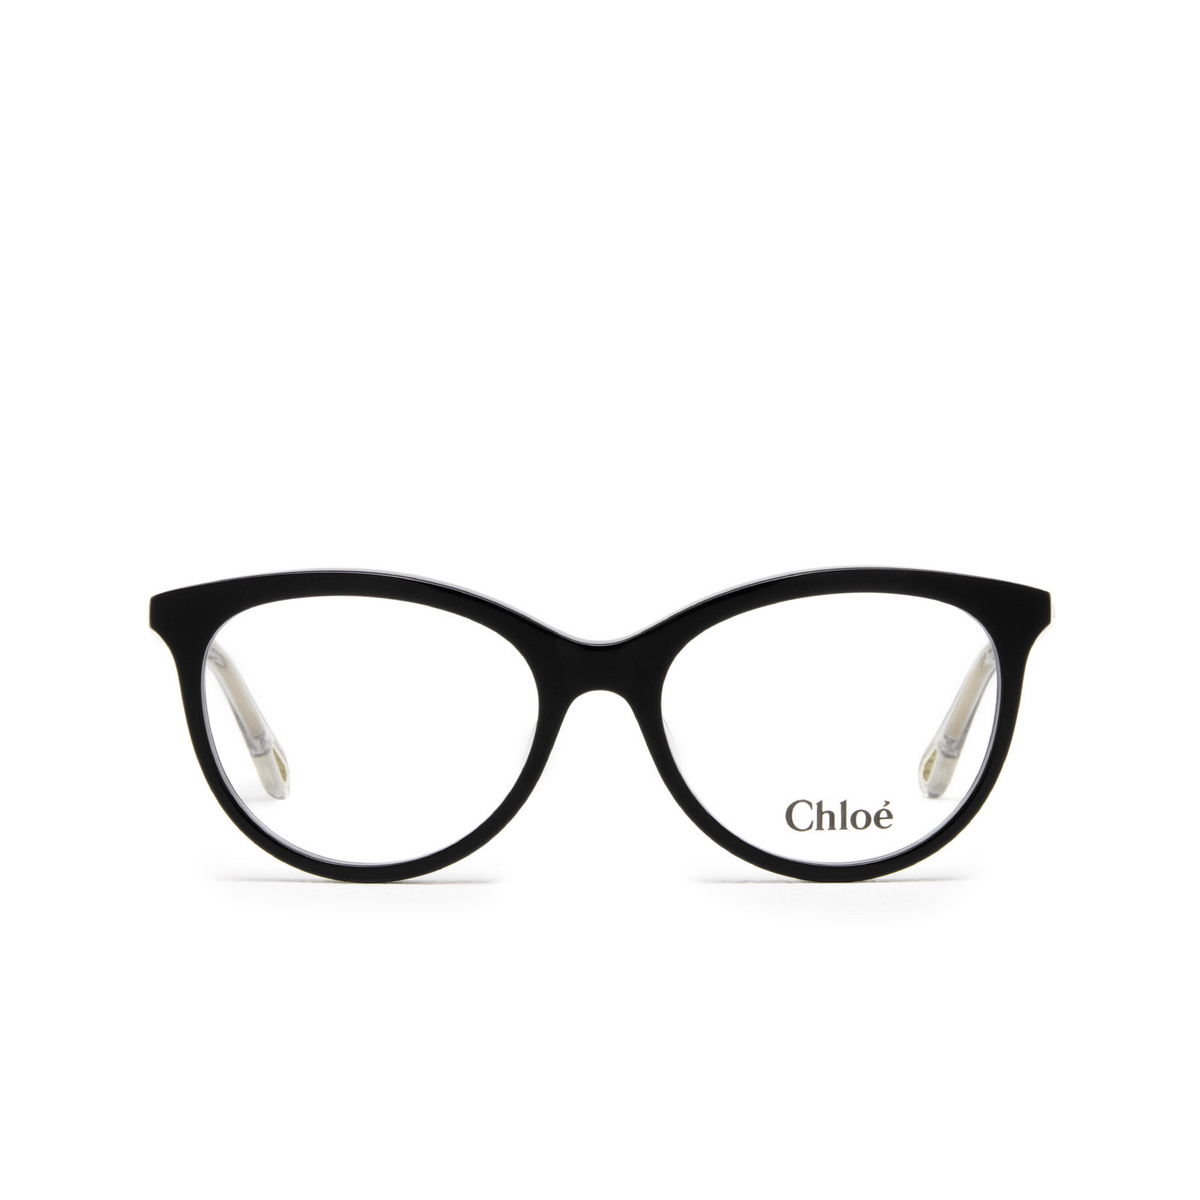 Chloé® Cat-eye Eyeglasses: CH0117O color Black 001 - front view.